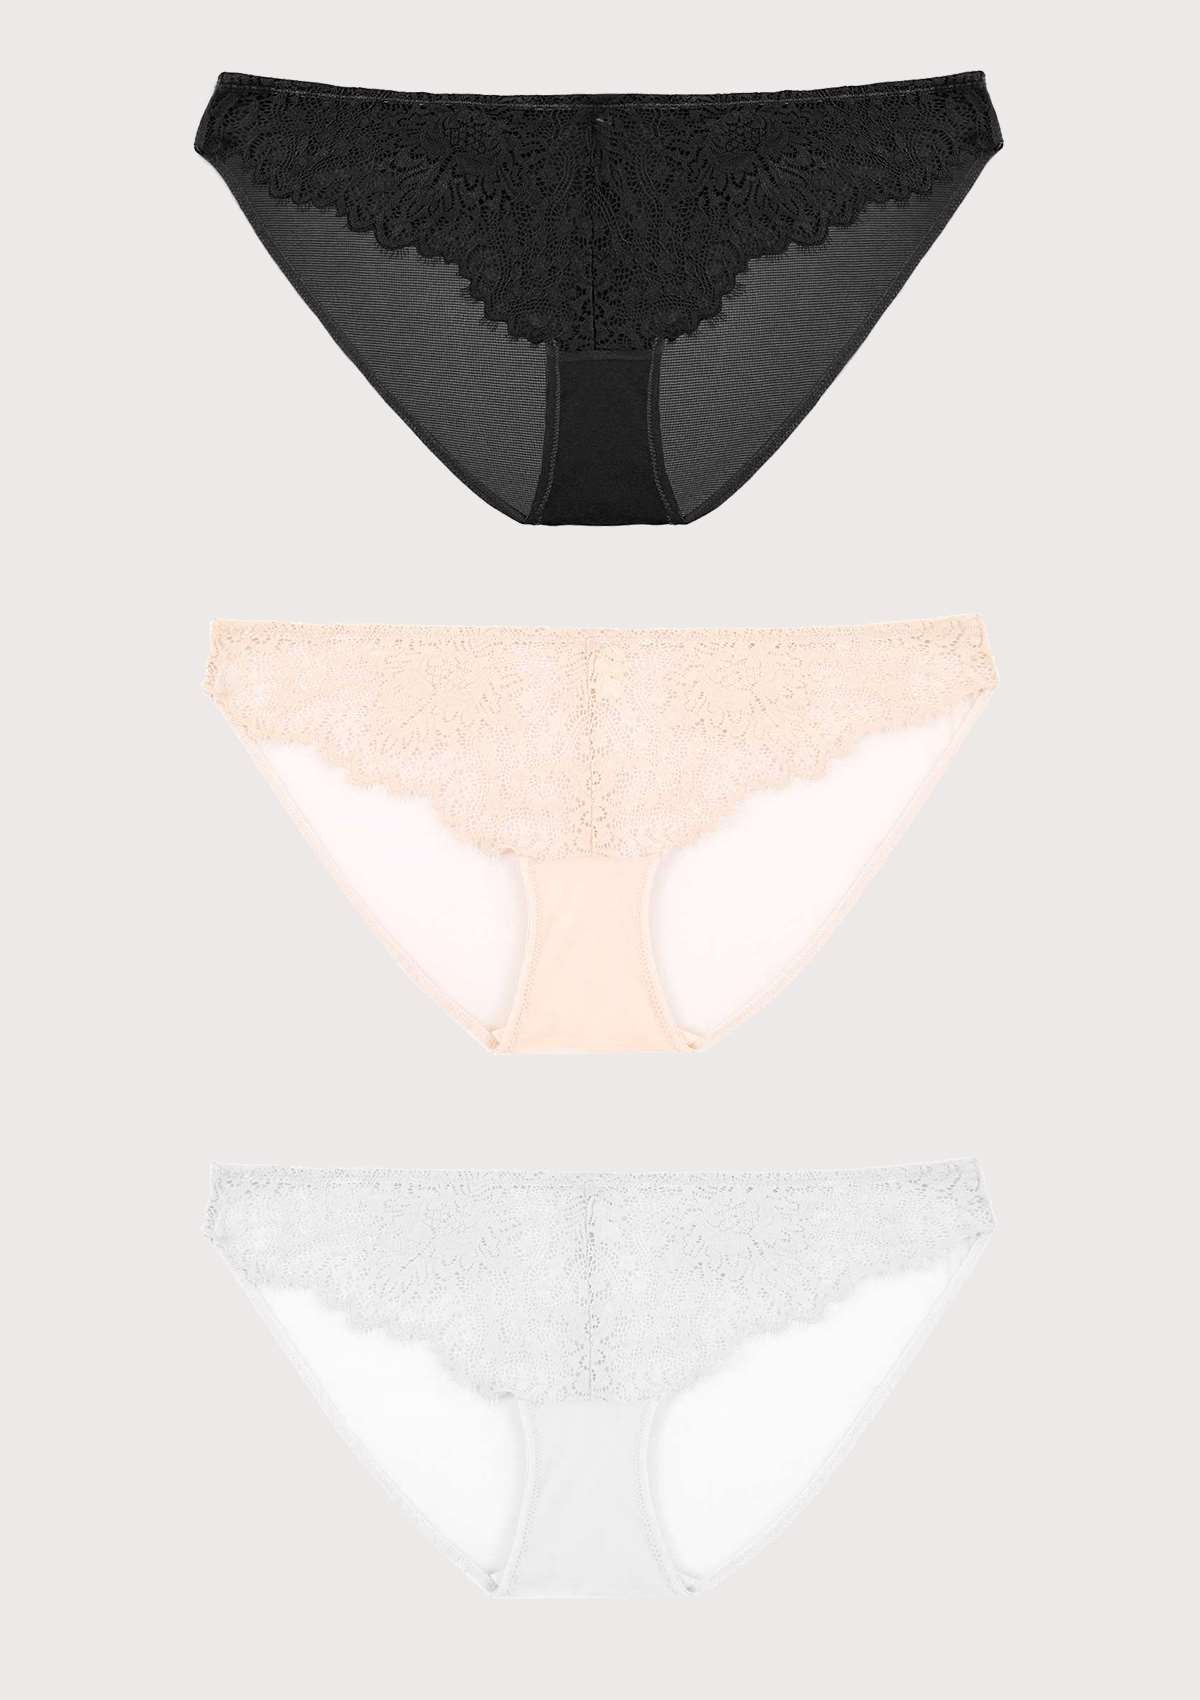 HSIA Sunflower Exquisite Lighweight Soft Lace Bikini Panties 3 Pack - XXXL / Black+White+Pink